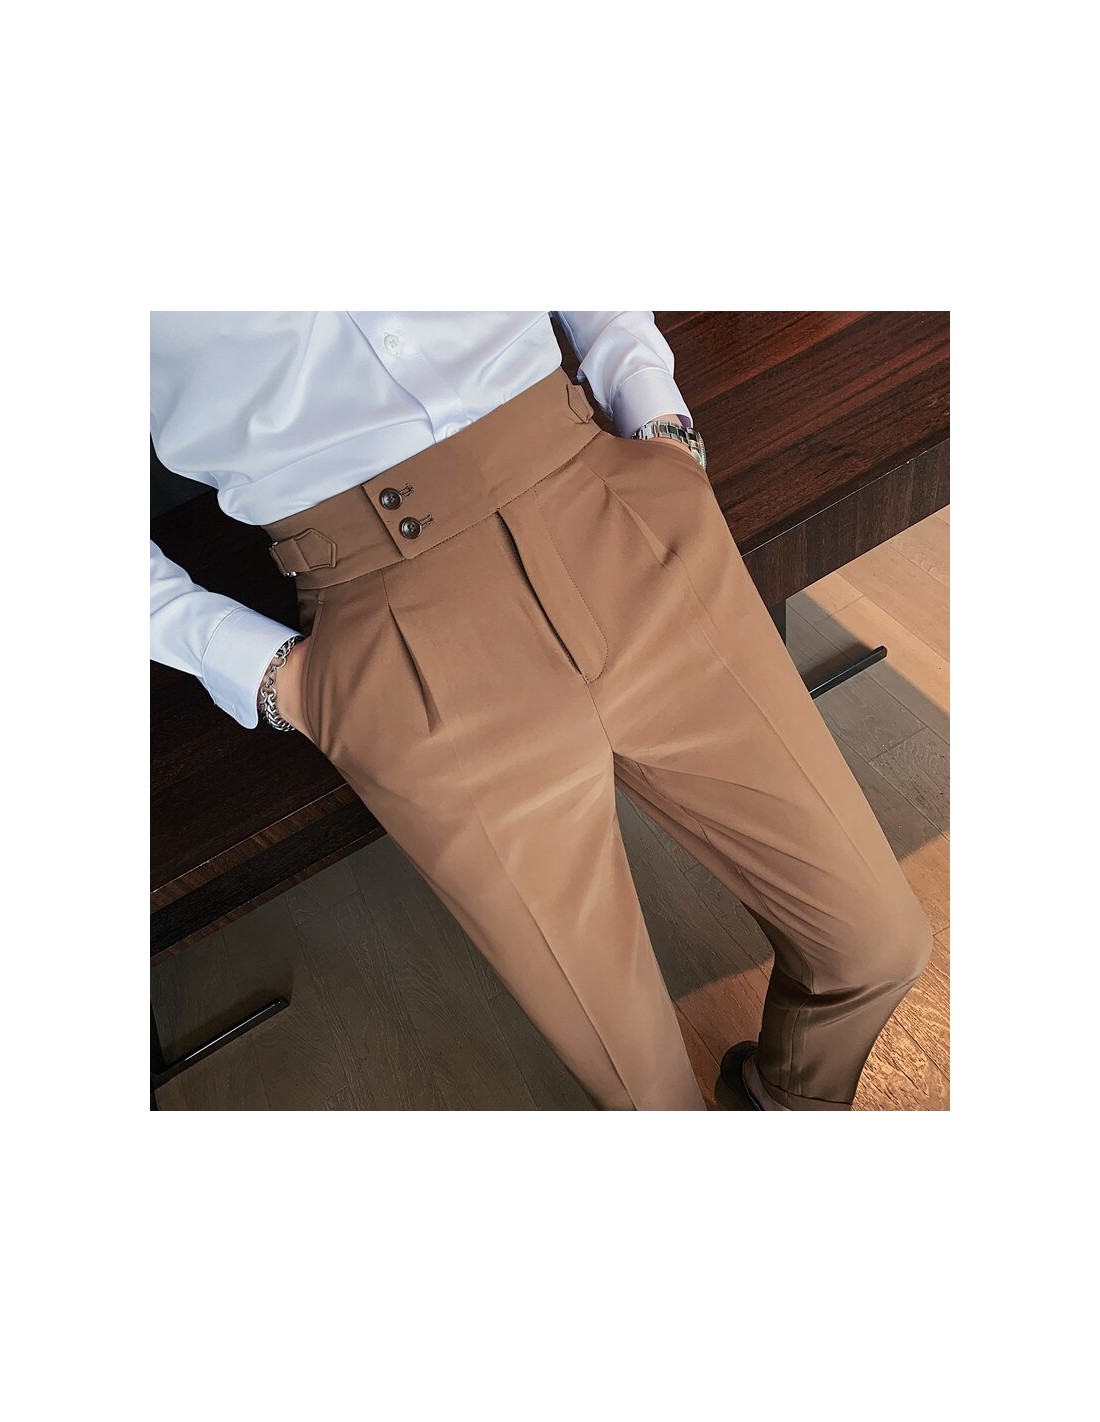 SCDZS Autumn Solid Business Casual Suit Pants Men Clothing Formal